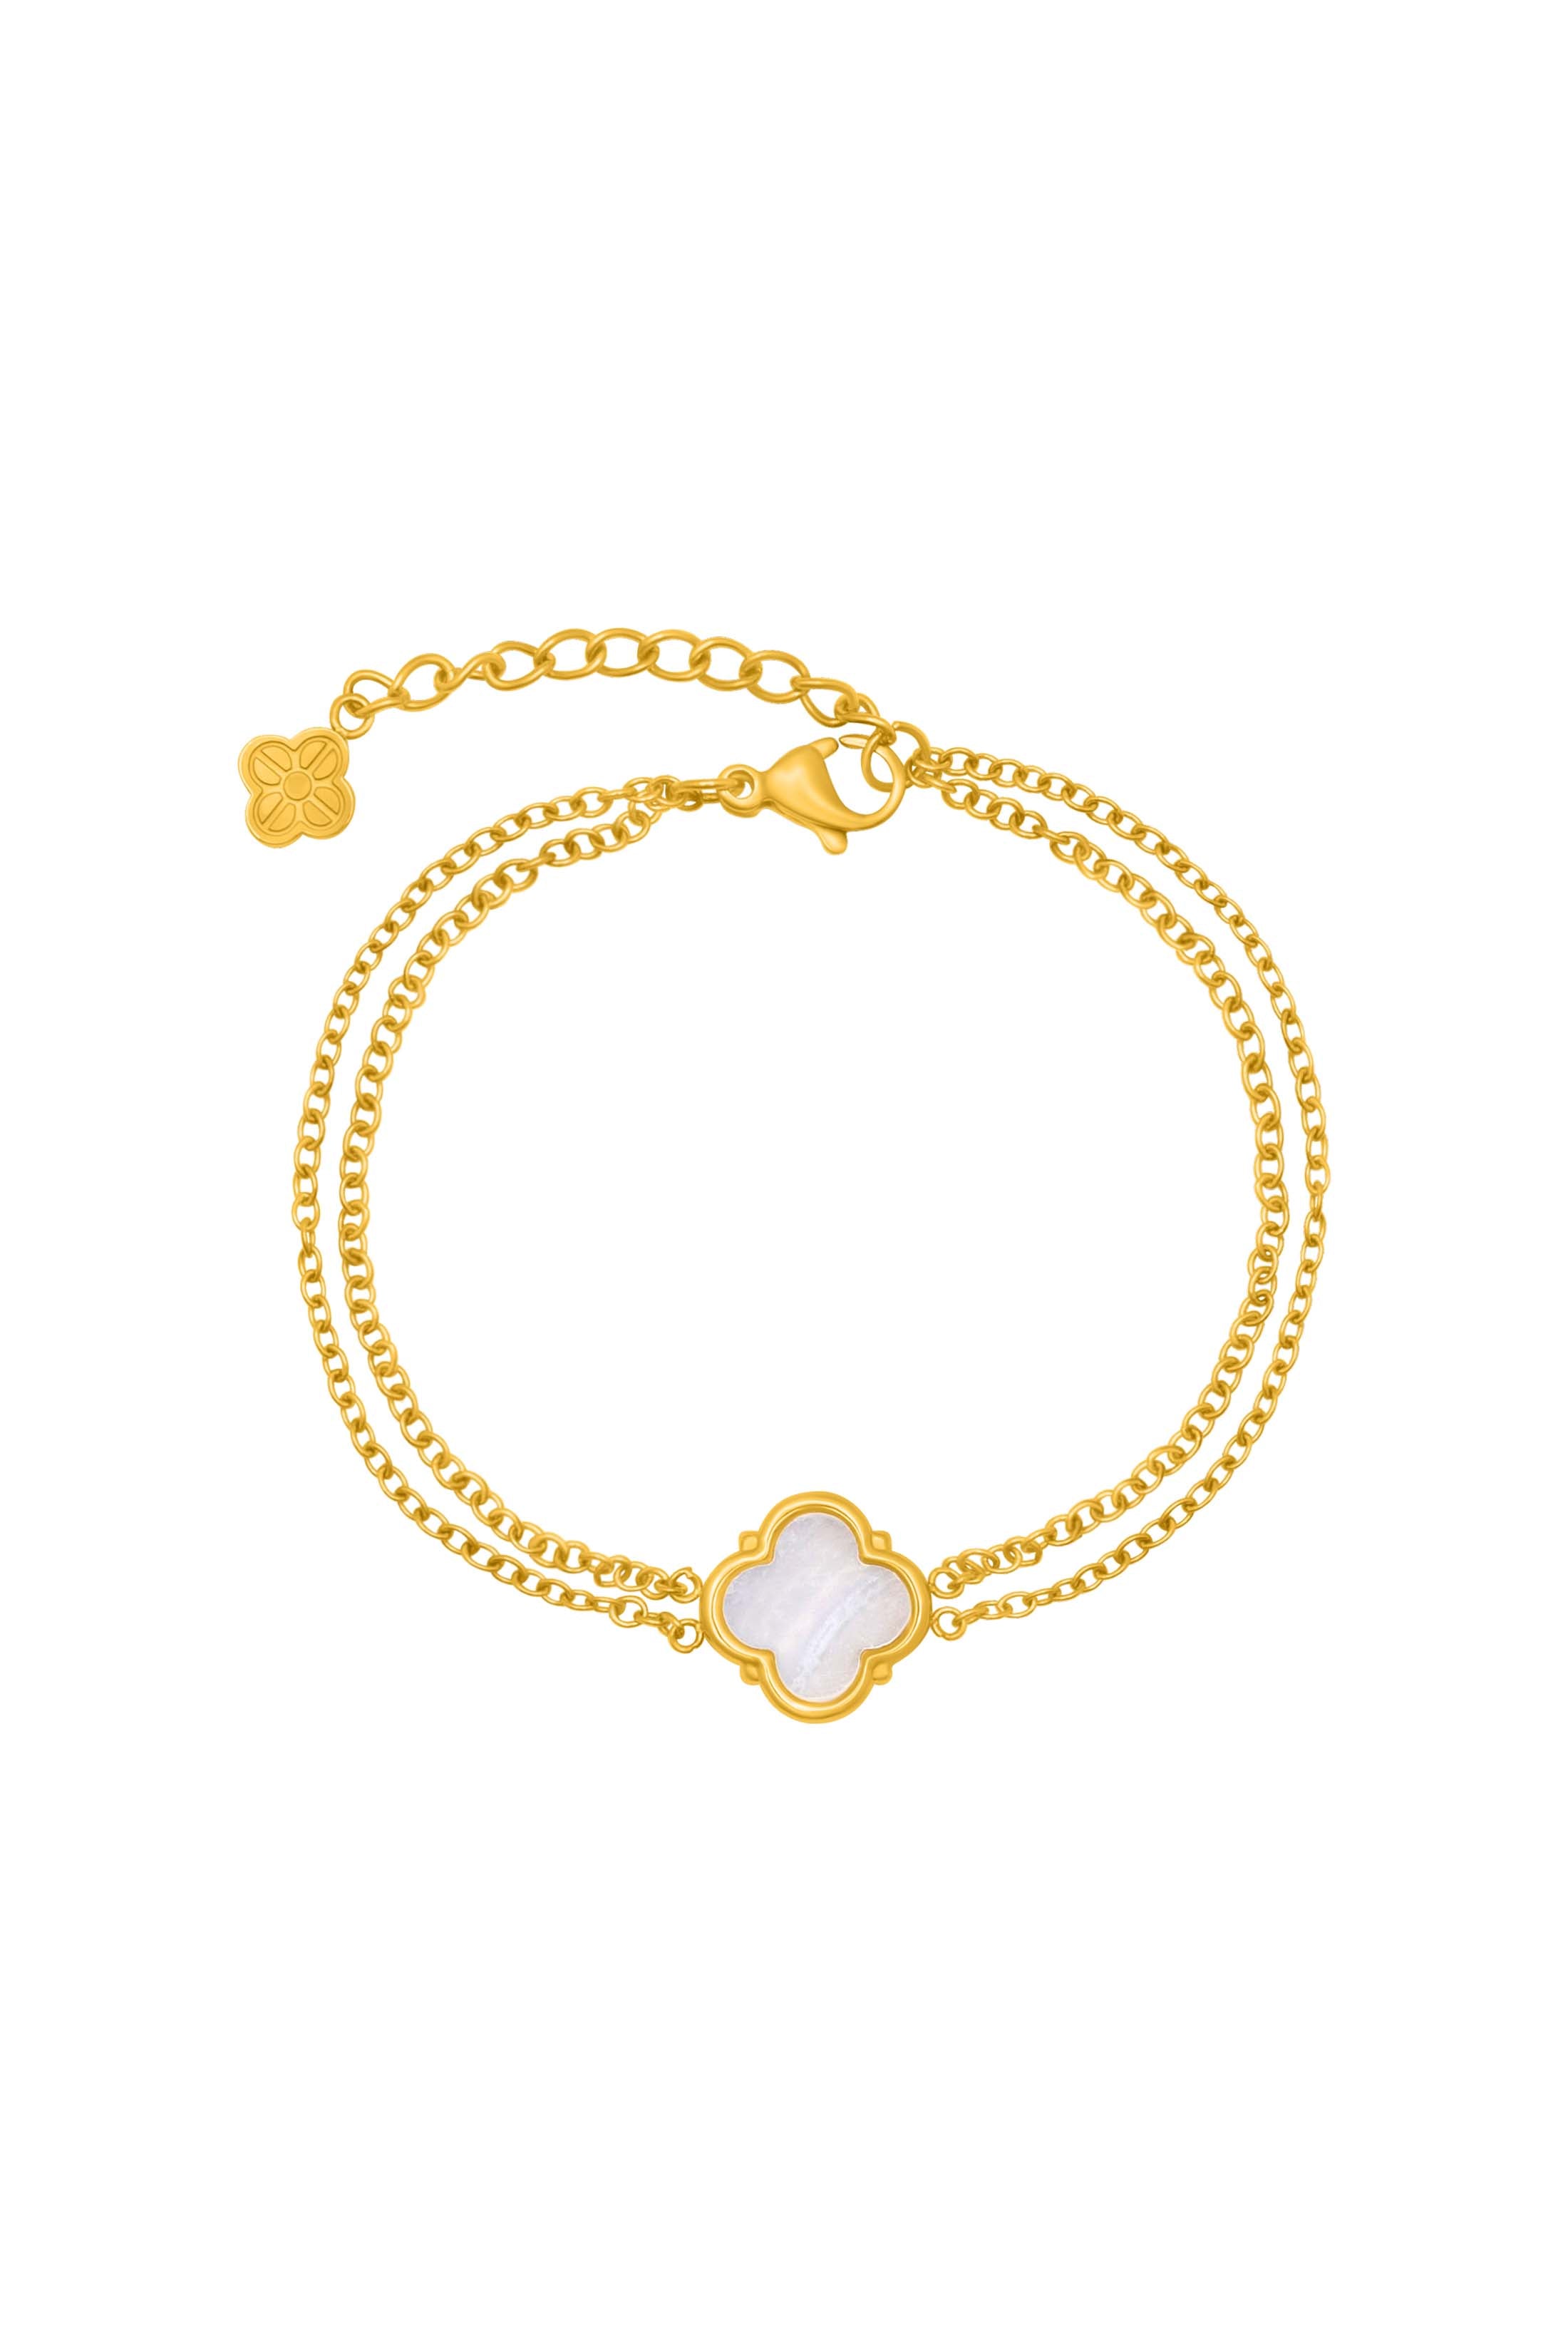 Lace Agate Stone Bracelet